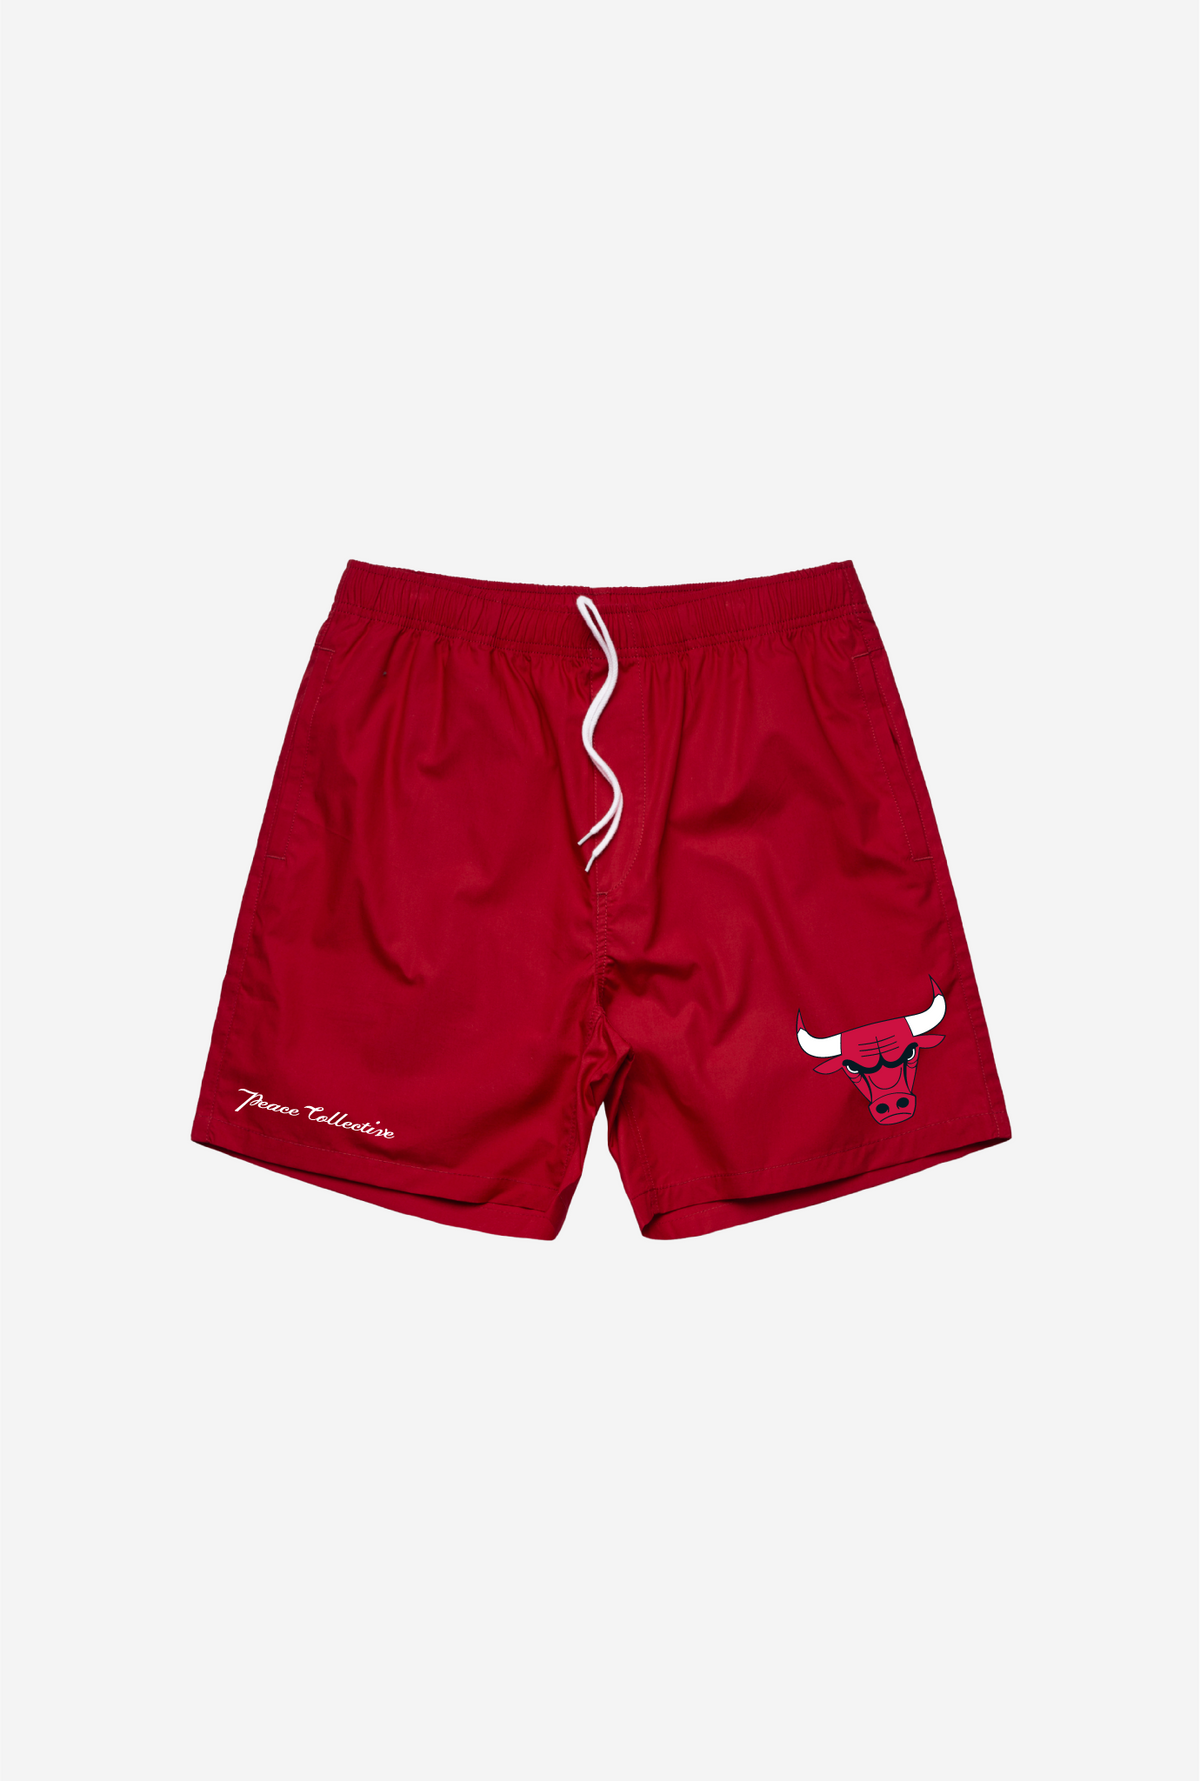 Chicago Bulls Shorts - Red